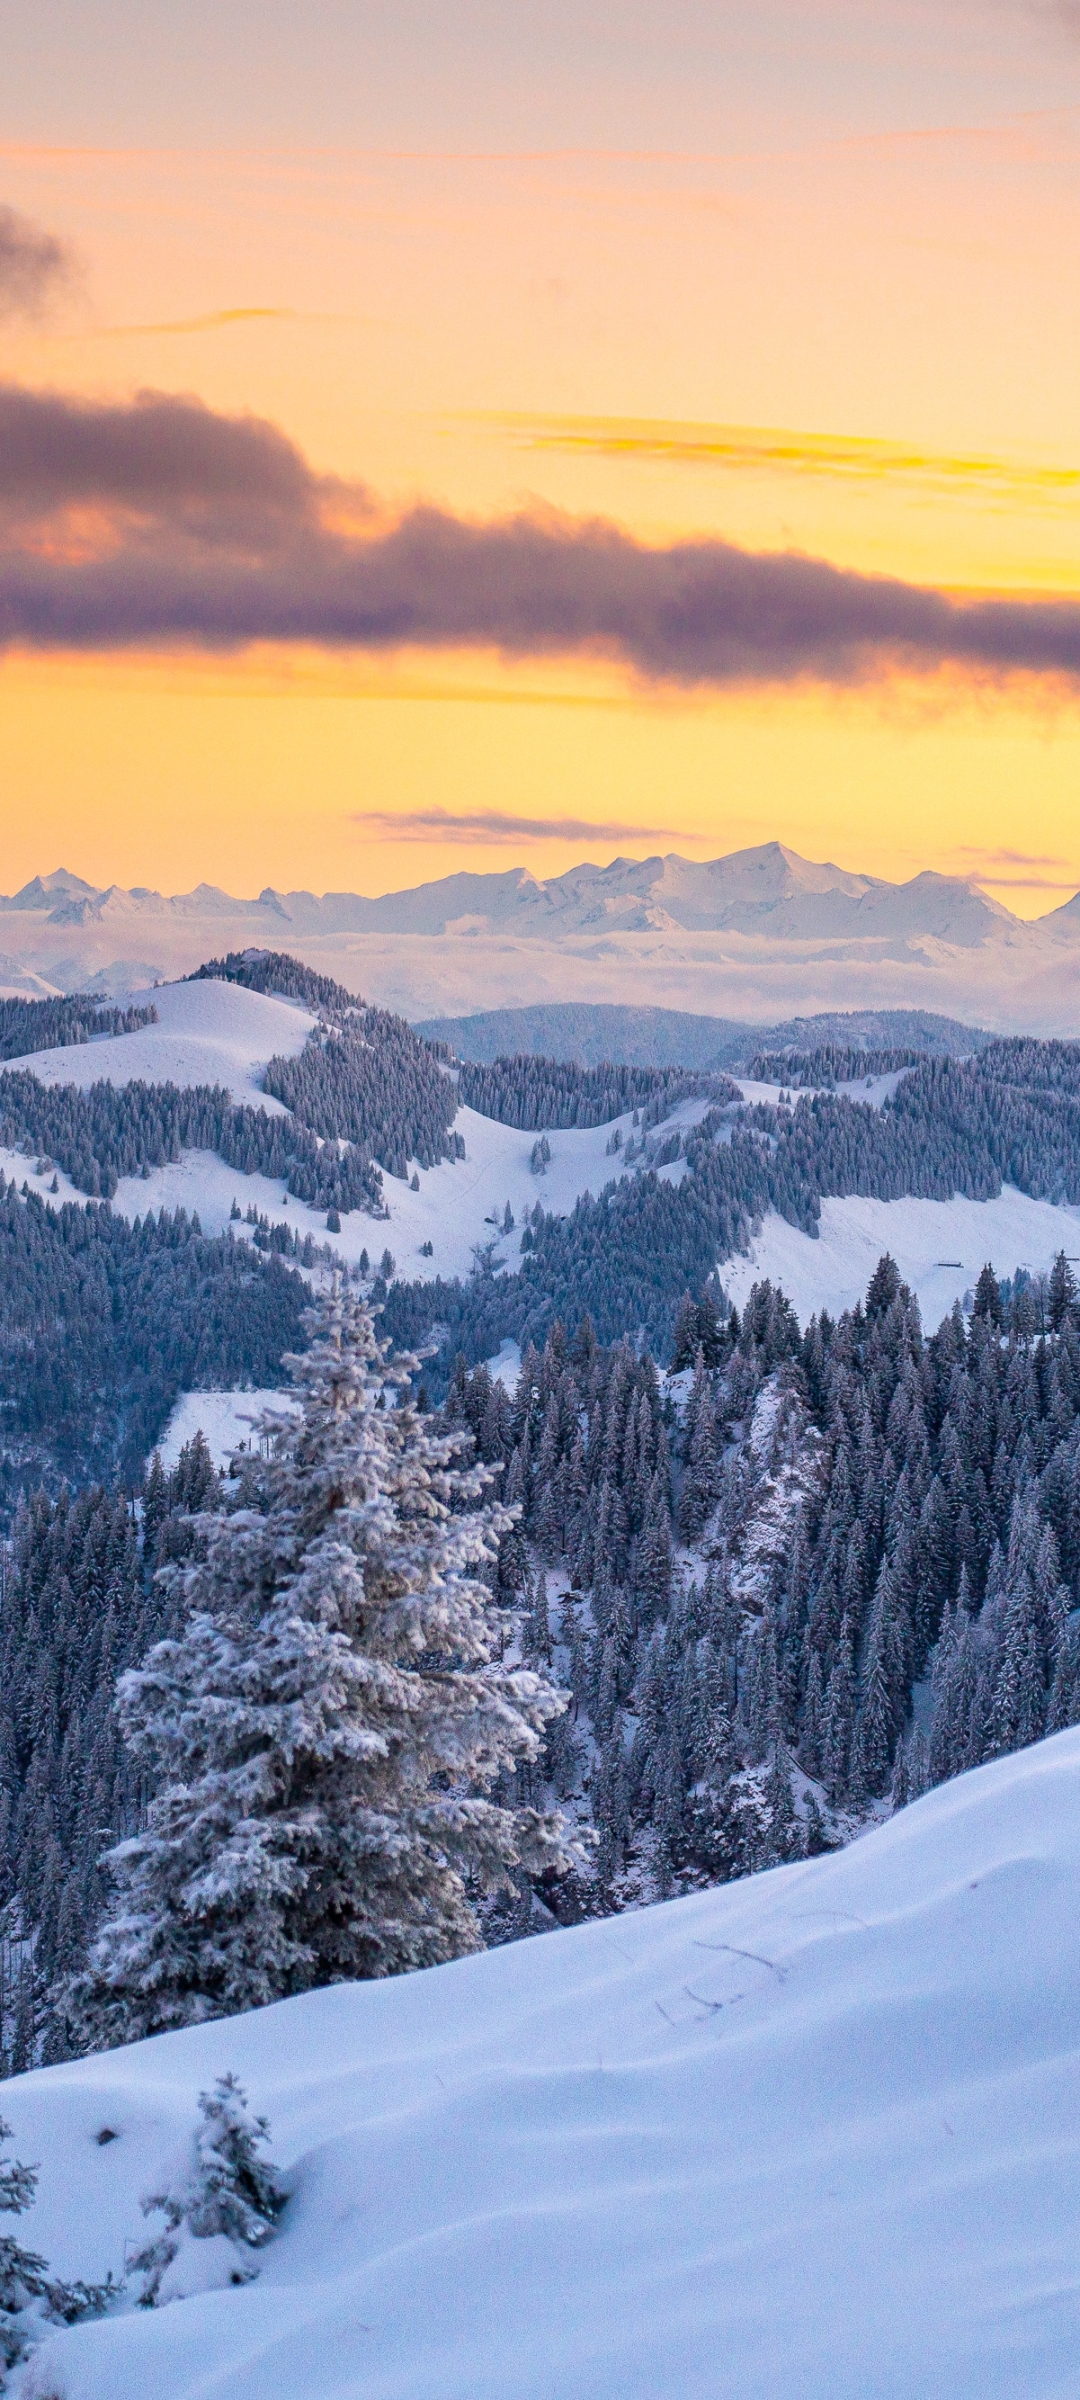 Handy-Wallpaper Landschaft, Winter, Schnee, Berg, Gebirge, Deutschland, Sonnenuntergang, Erde/natur kostenlos herunterladen.